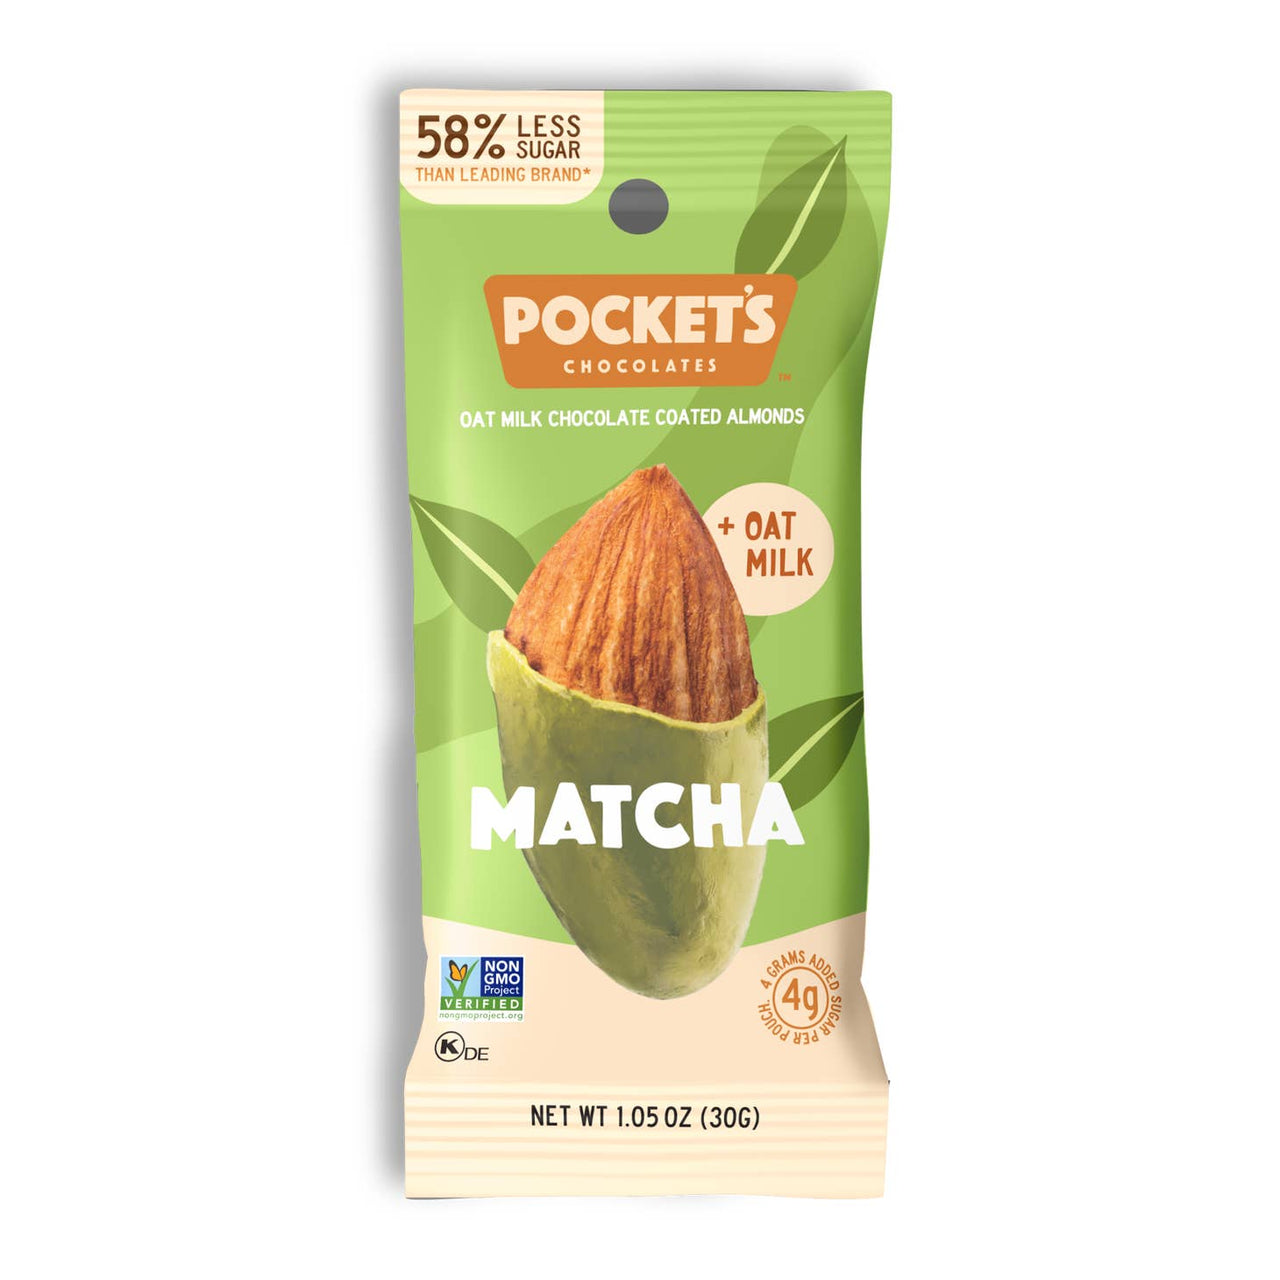 Pocket Chocolates - Single Serve Choco Nuts - Matcha - (1.05oz)